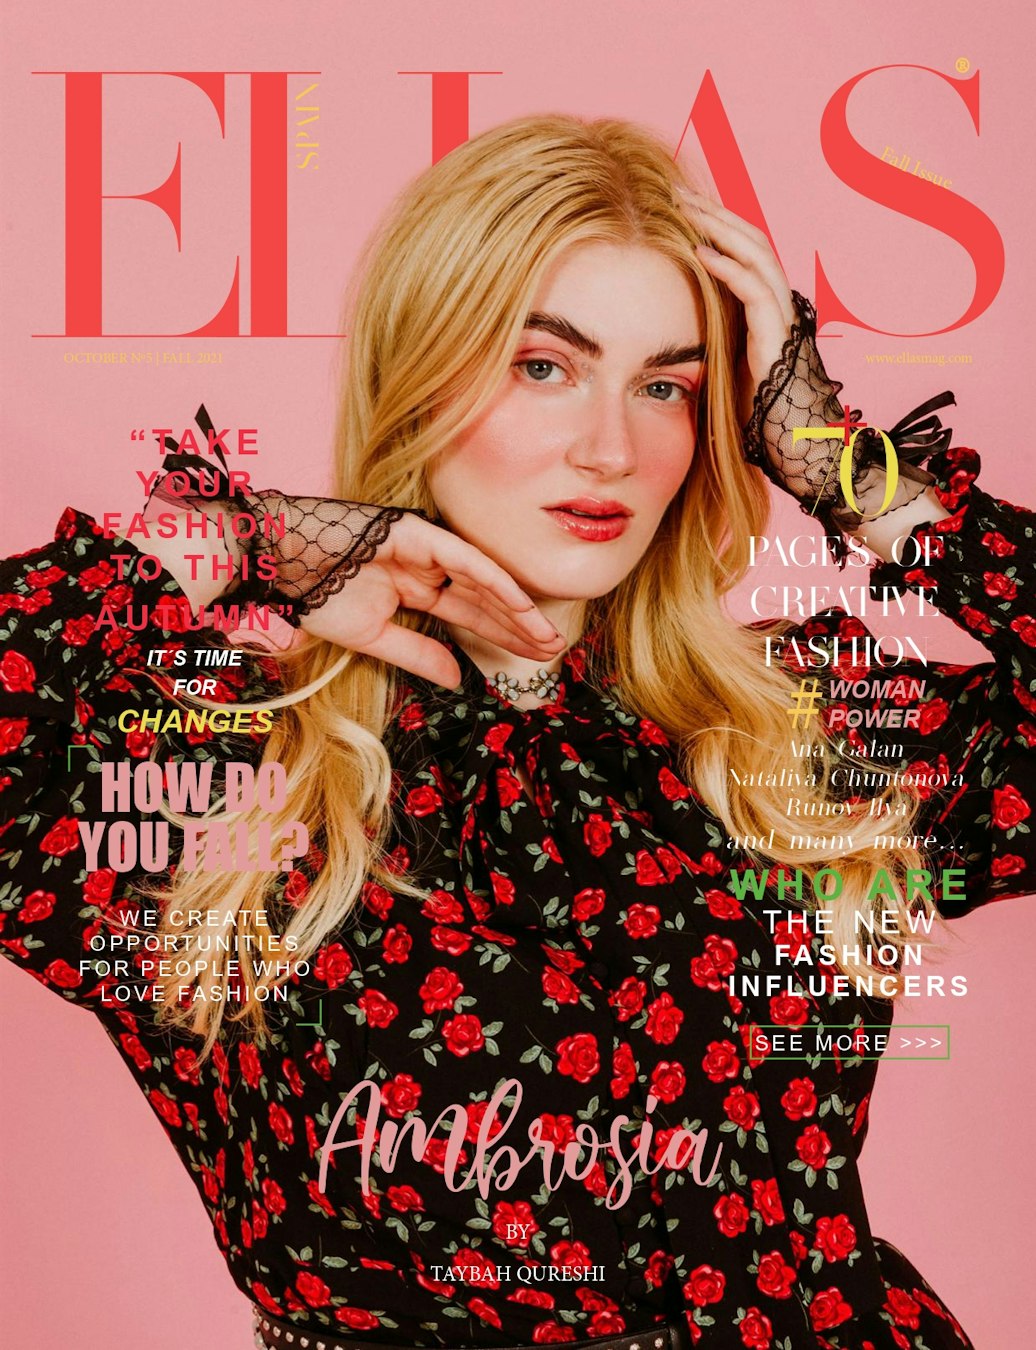 Ellas Magazine Merged_page-0001